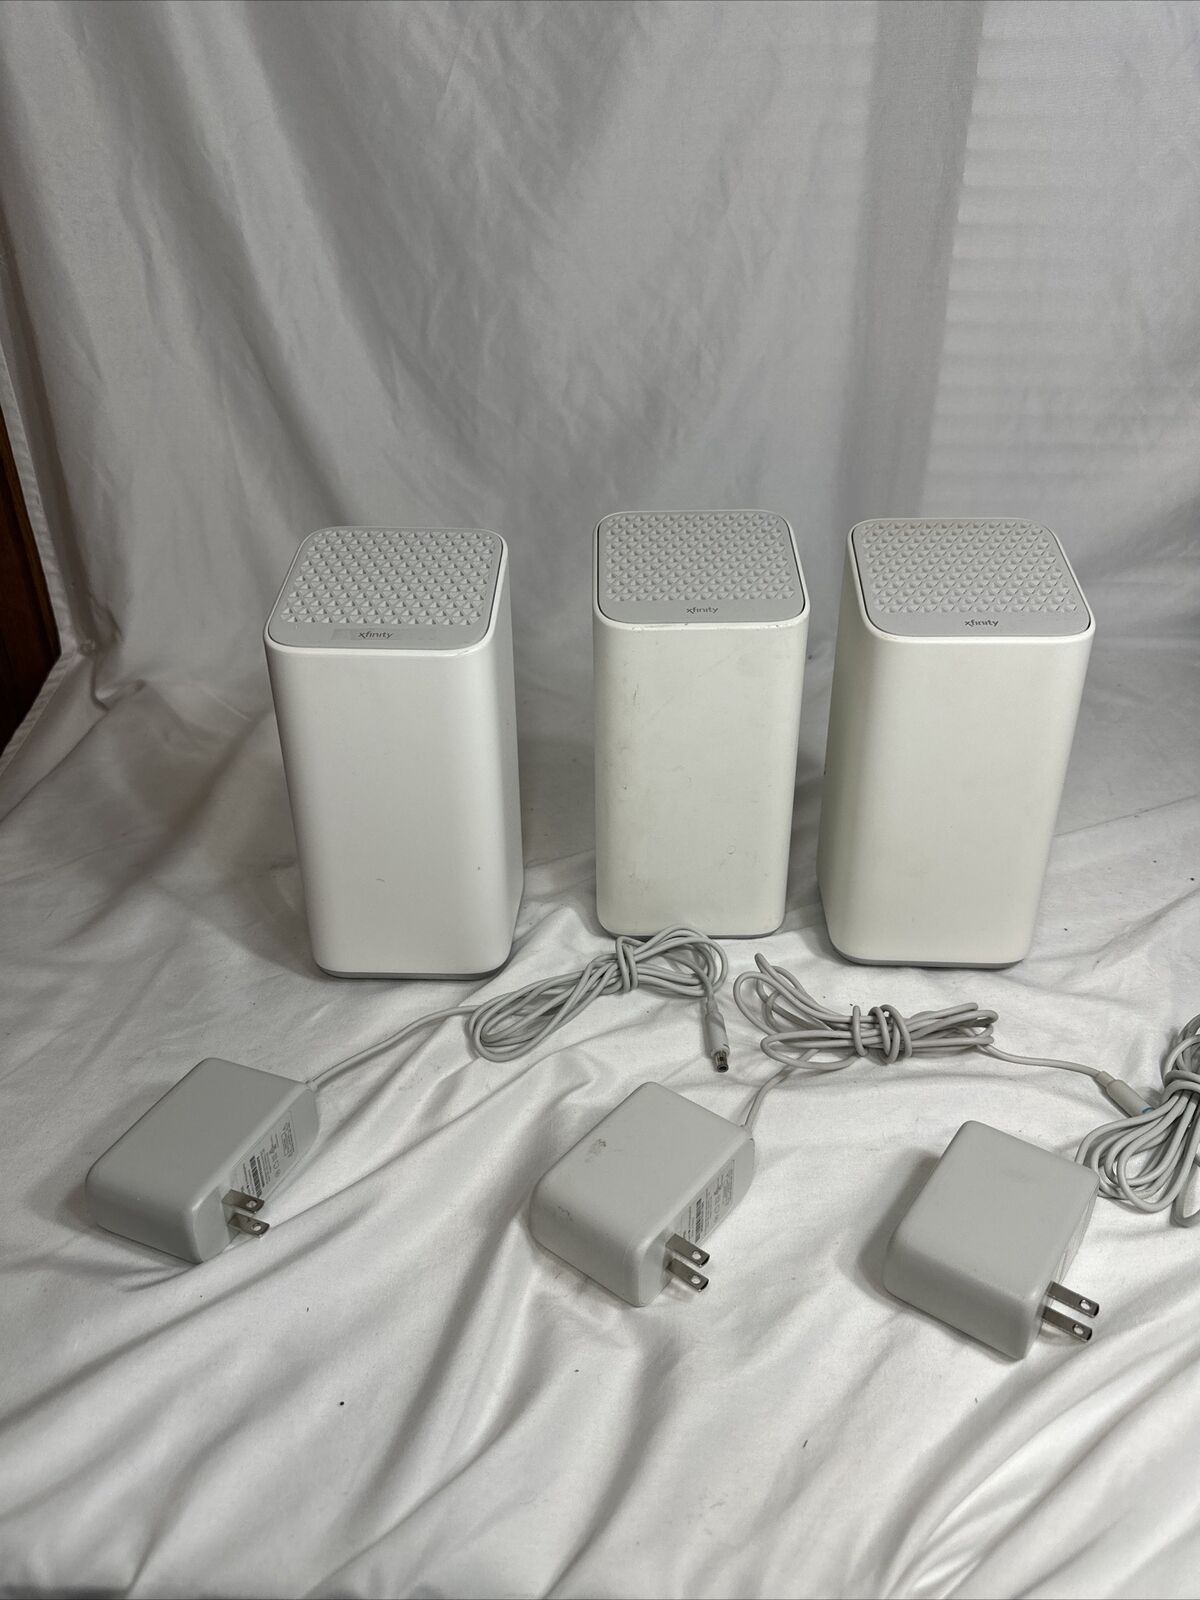 Xfinity Home WiFi Router Modem White XB7-CM & XB7-T With Power Adaptors - READ